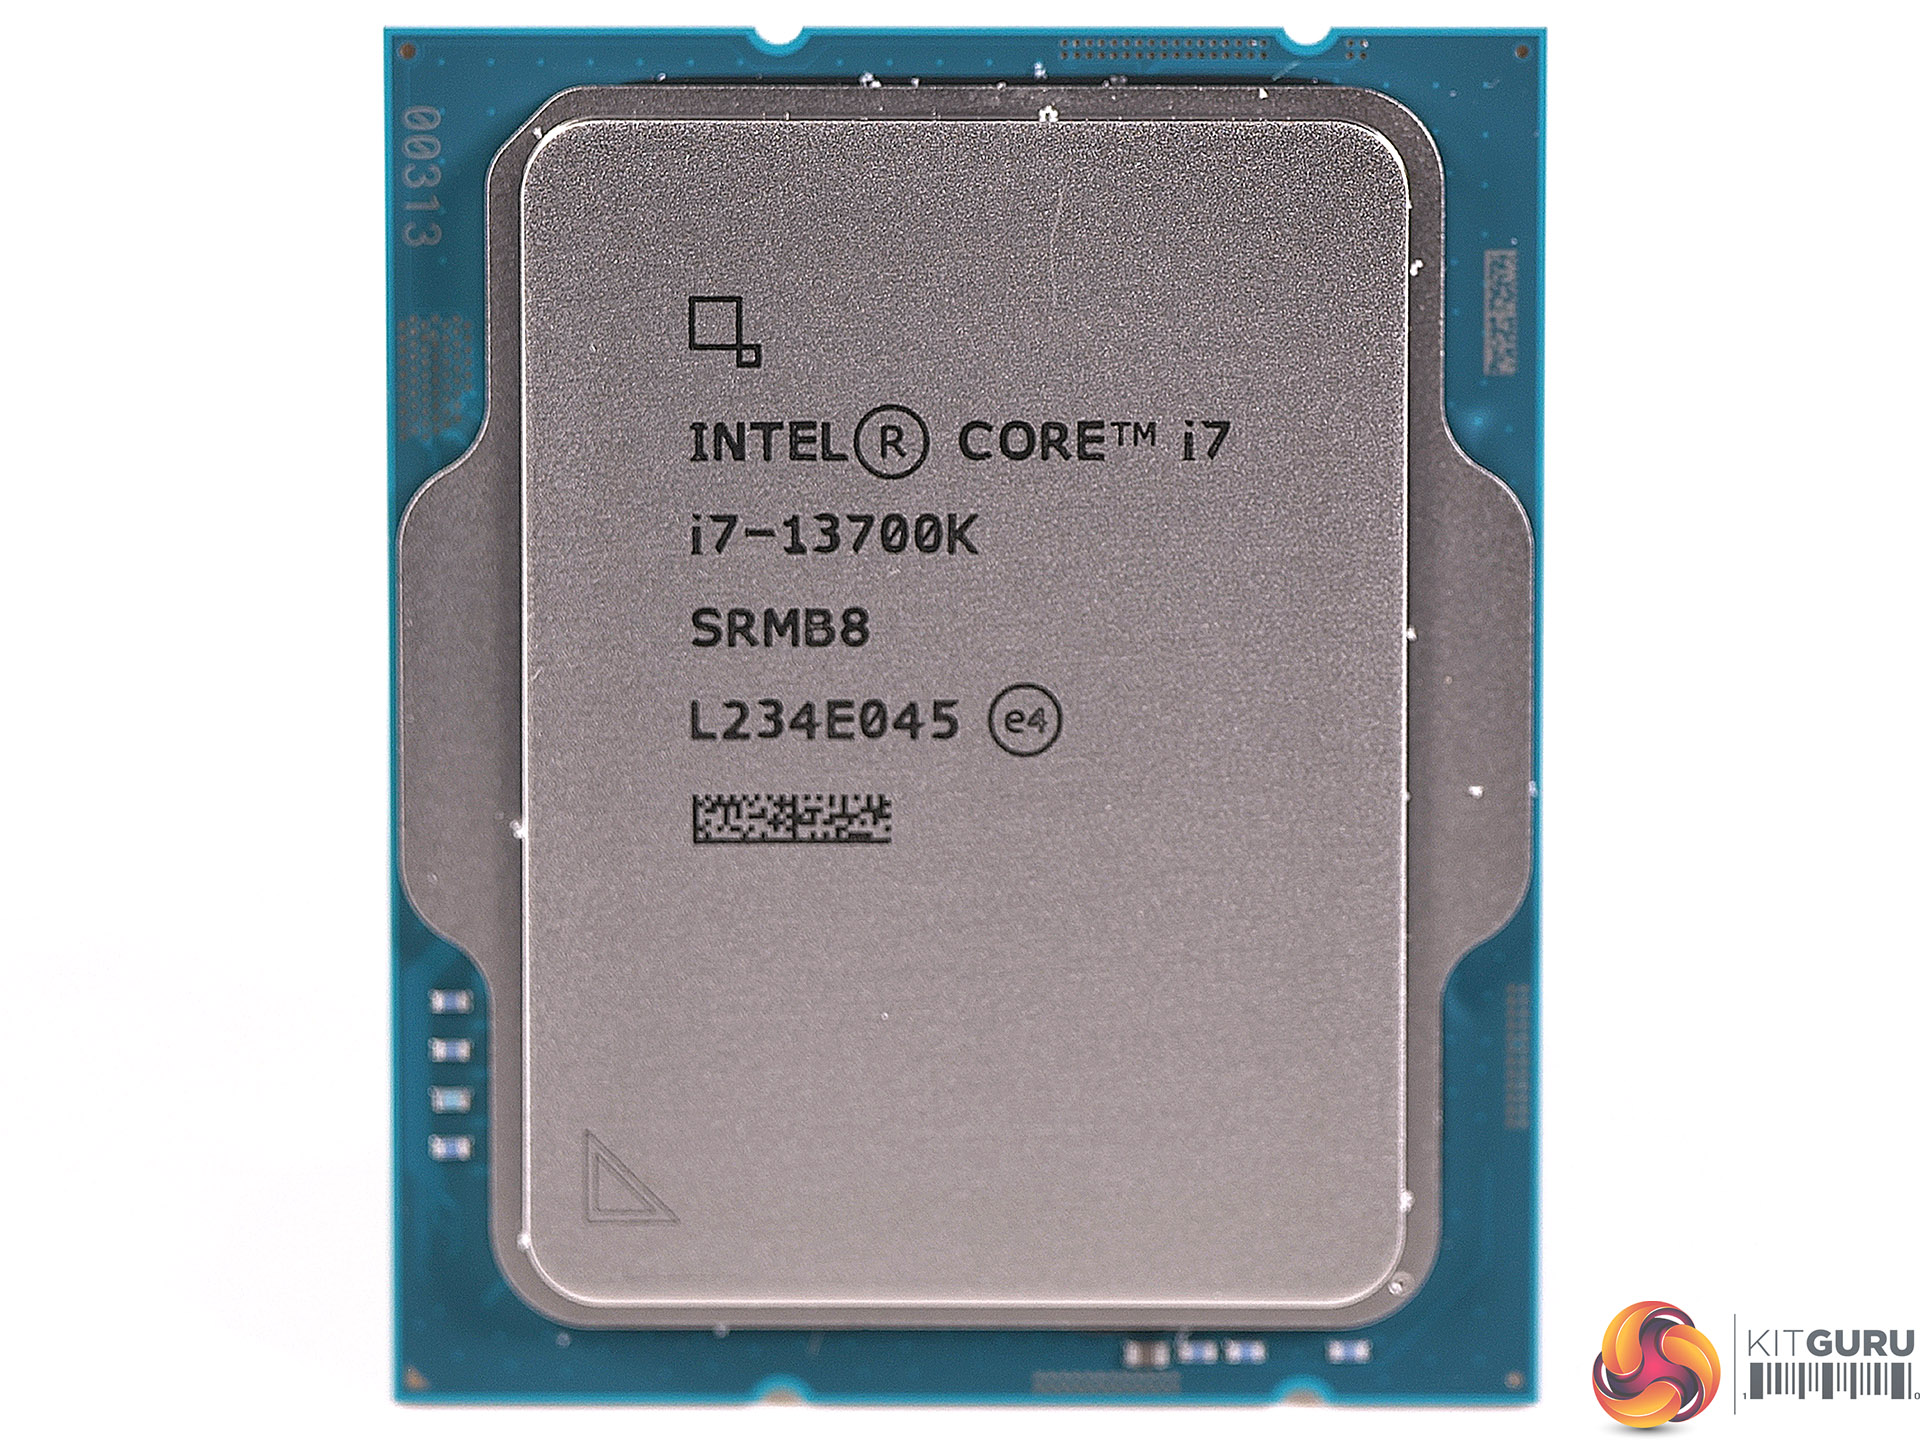 Intel Core i7-13700K Review